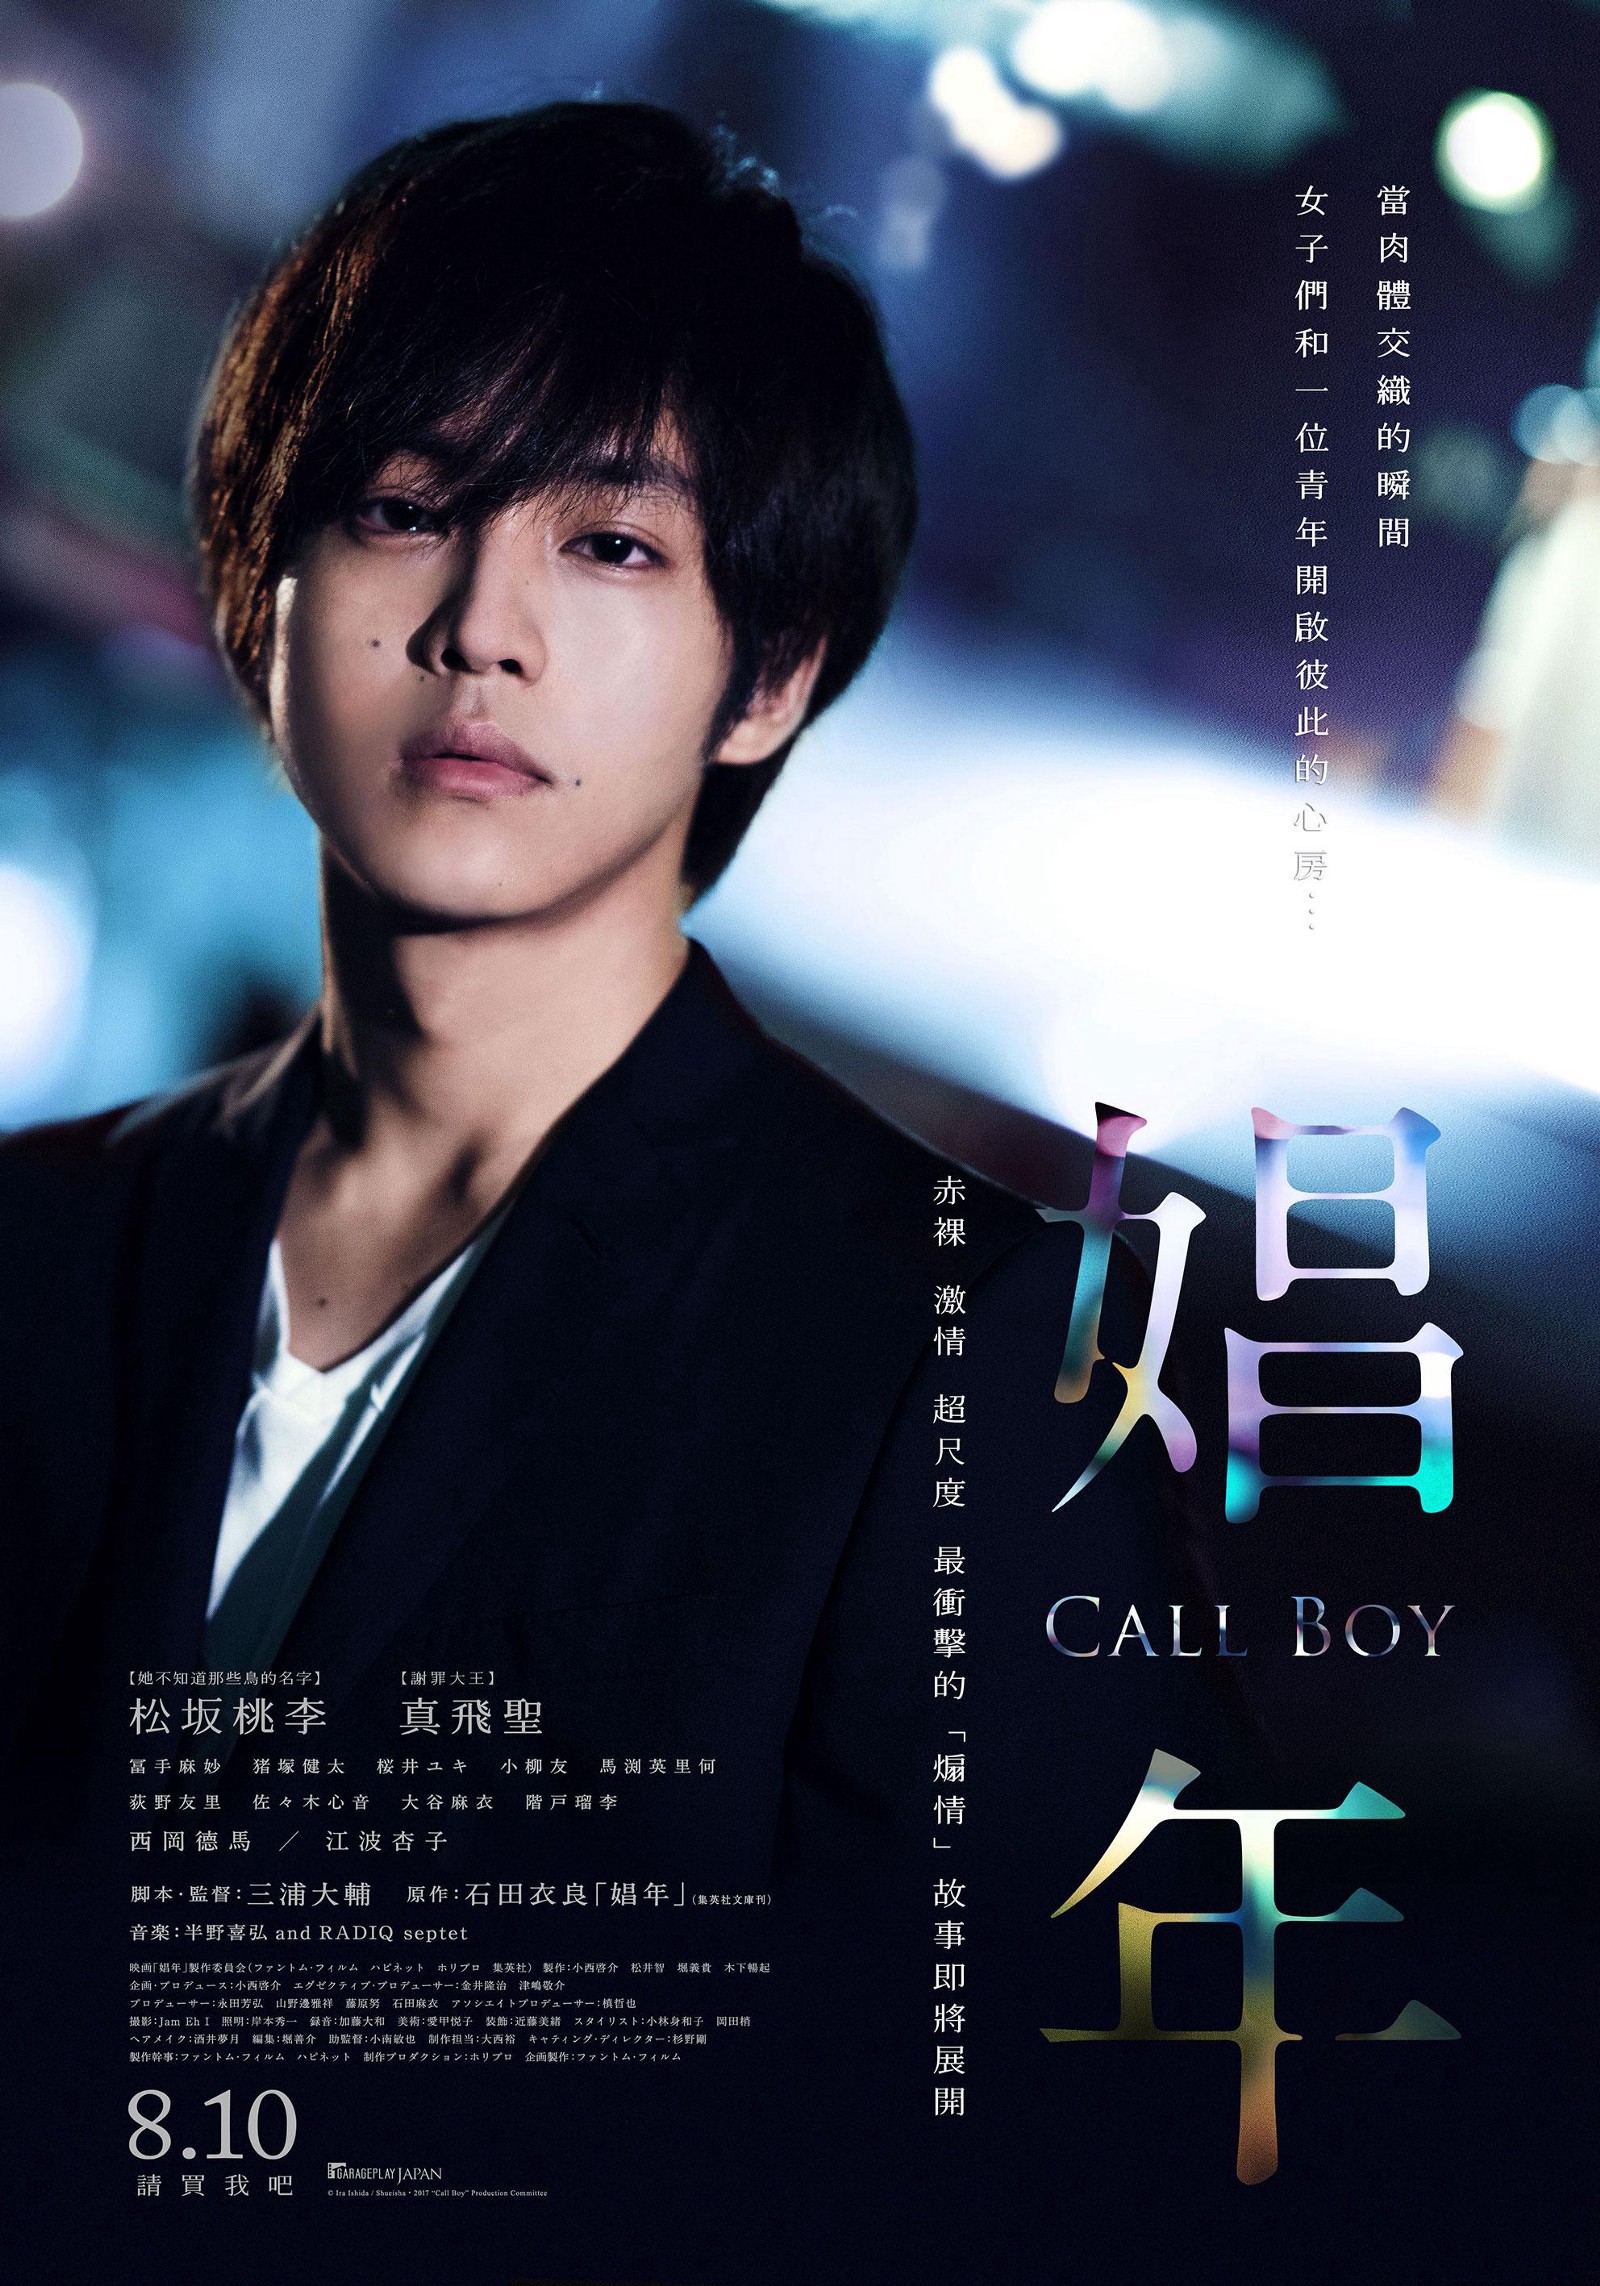 Call Boy - Call Boy (2018)